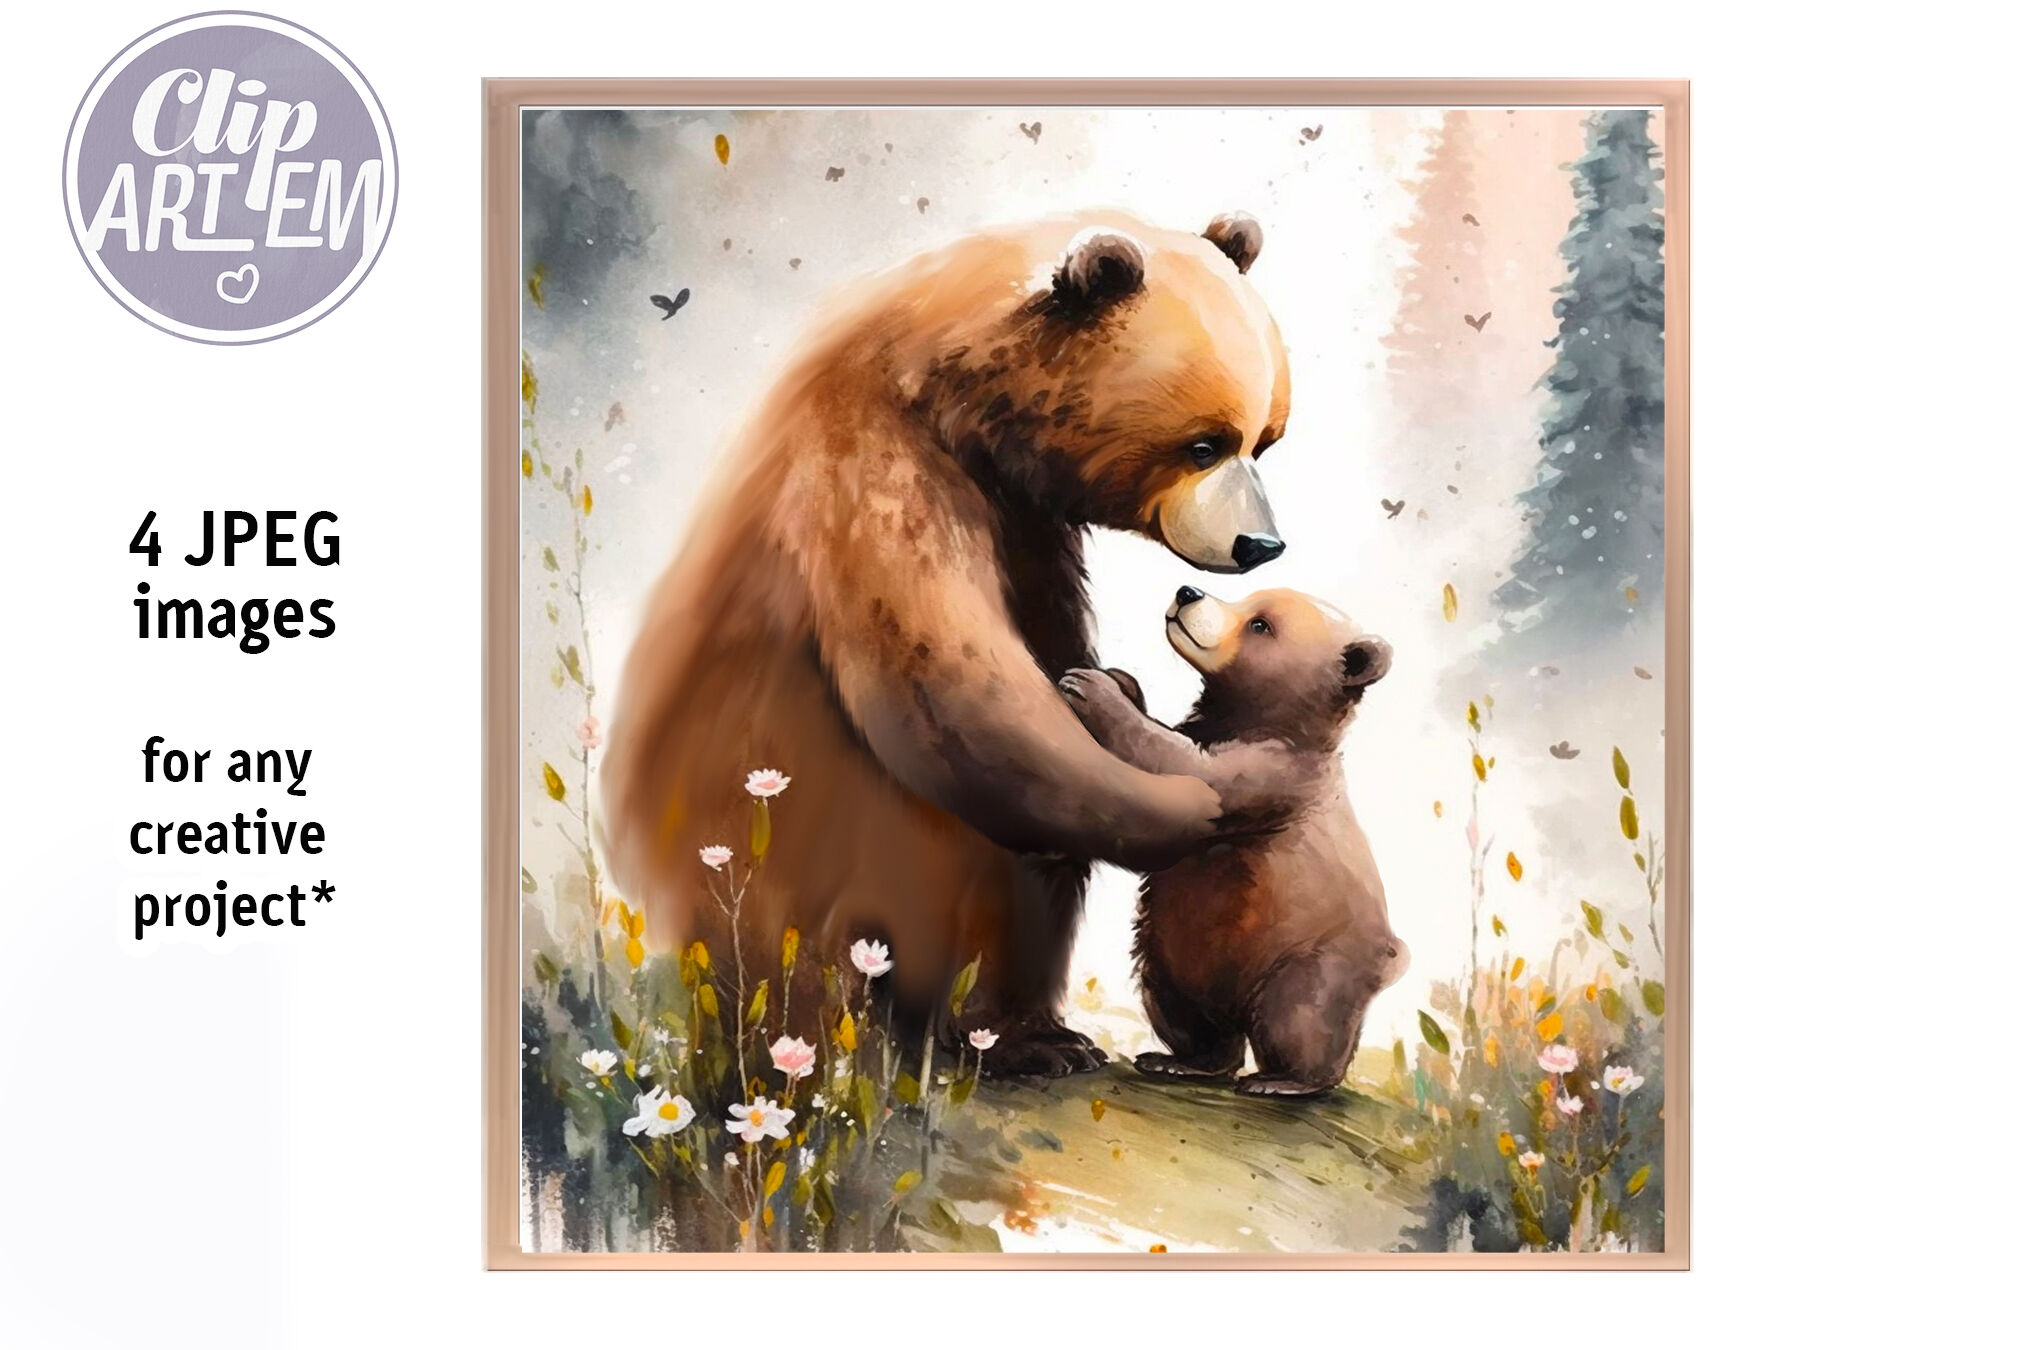 https://media1.thehungryjpeg.com/thumbs2/ori_4254535_z5q6d0bqq67qus25ejixd34h4y3cmati985widuv_mother-bear-baby-cub-painting-artwork-4jpeg-images-set-wall-art-decor.jpg